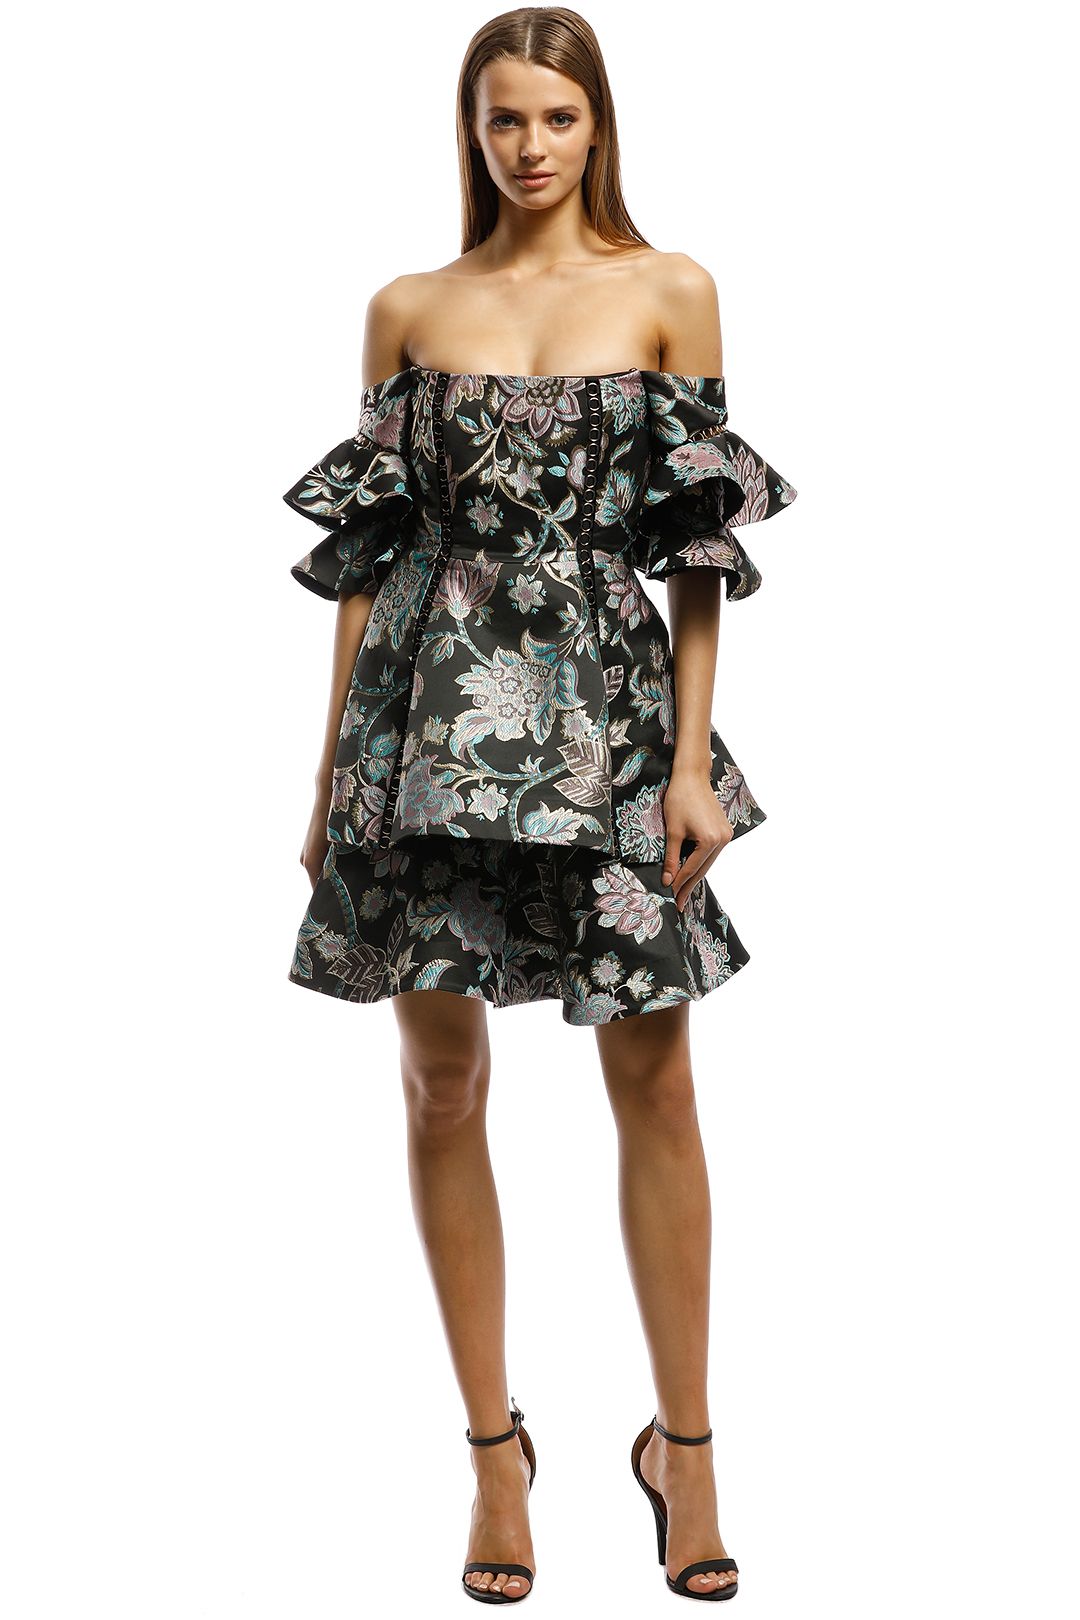 Oriental Chintz Jacquard Mini Dress by Thurley for Rent | GlamCorner